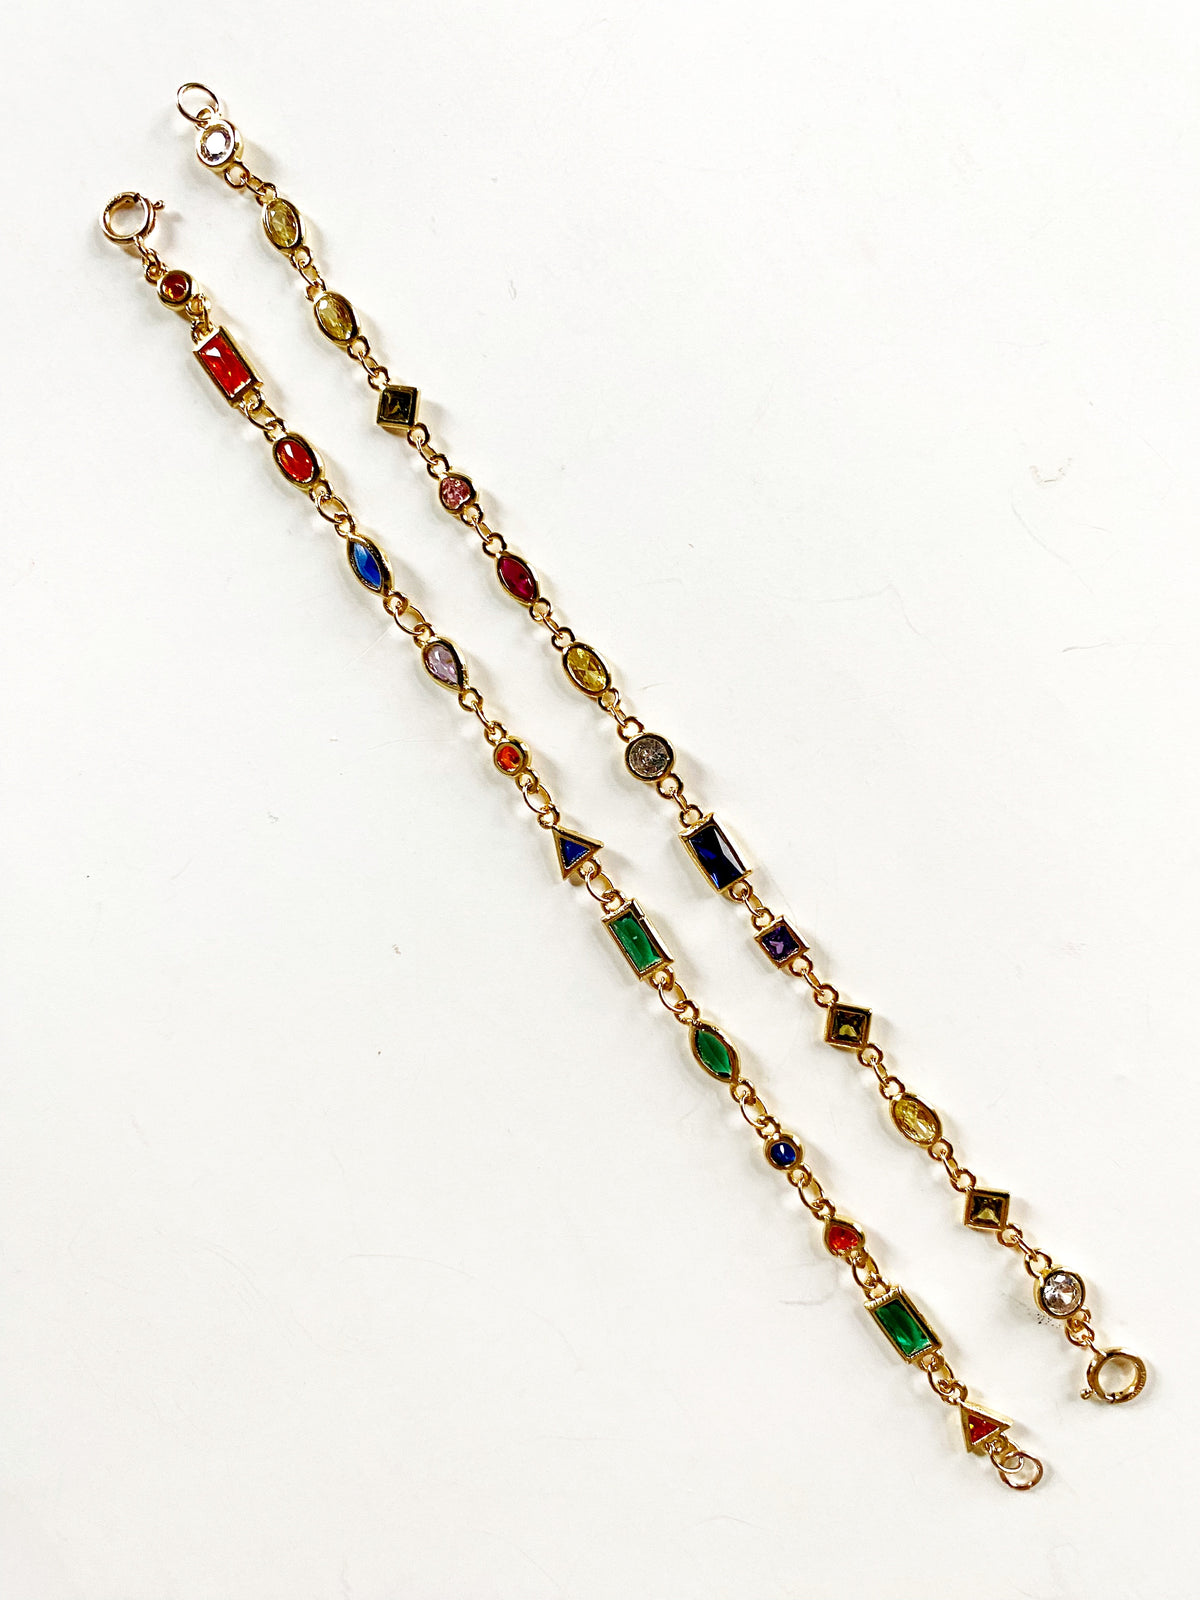 Gemma Colorful Bracelet: 6.5 inches